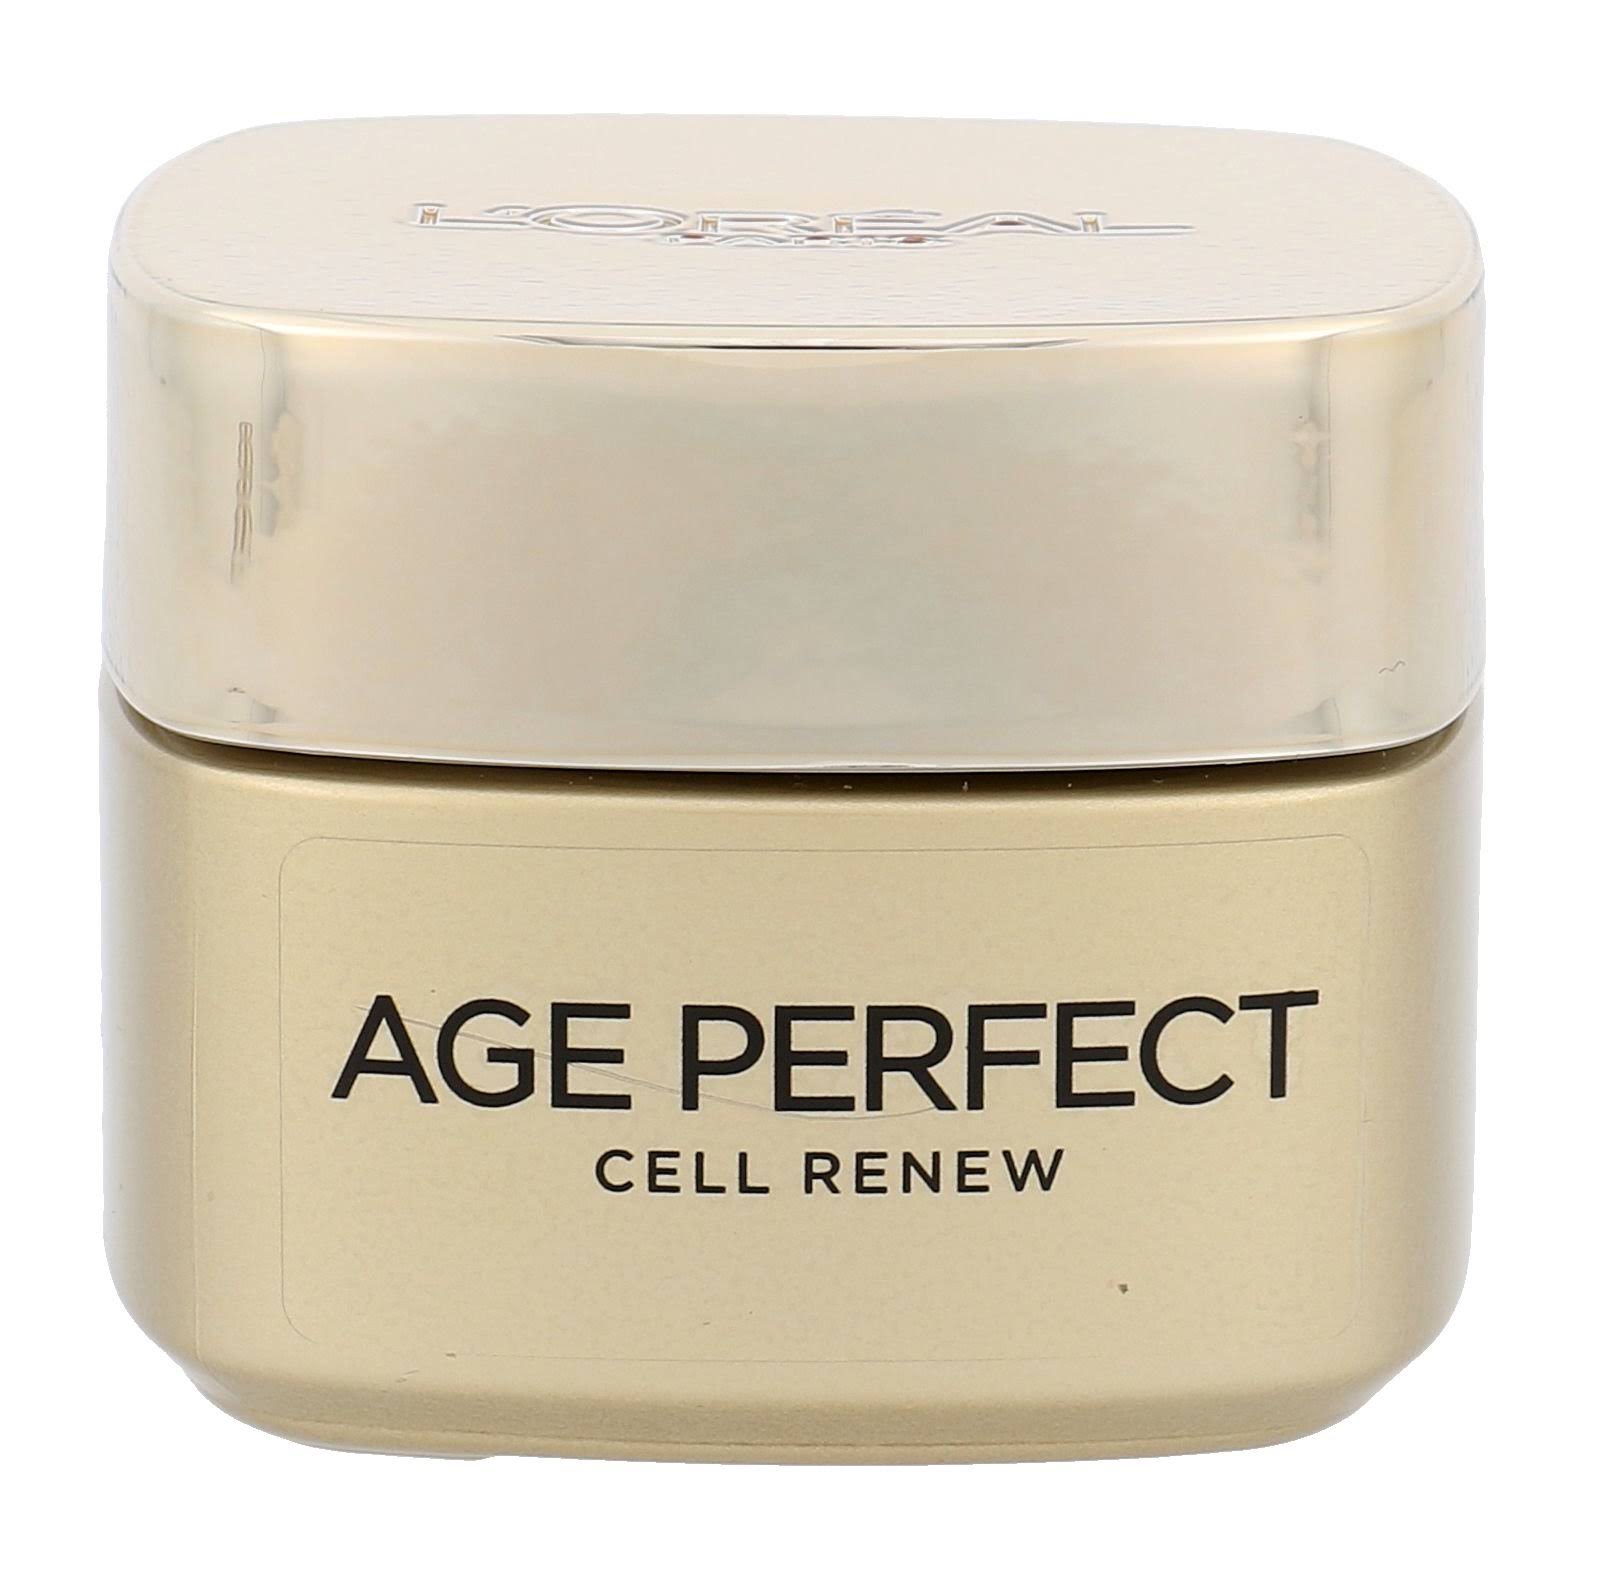 Loreal Age Perfect Cell Renew Advanced Restoring Day Cream - SPF 15, 50ml